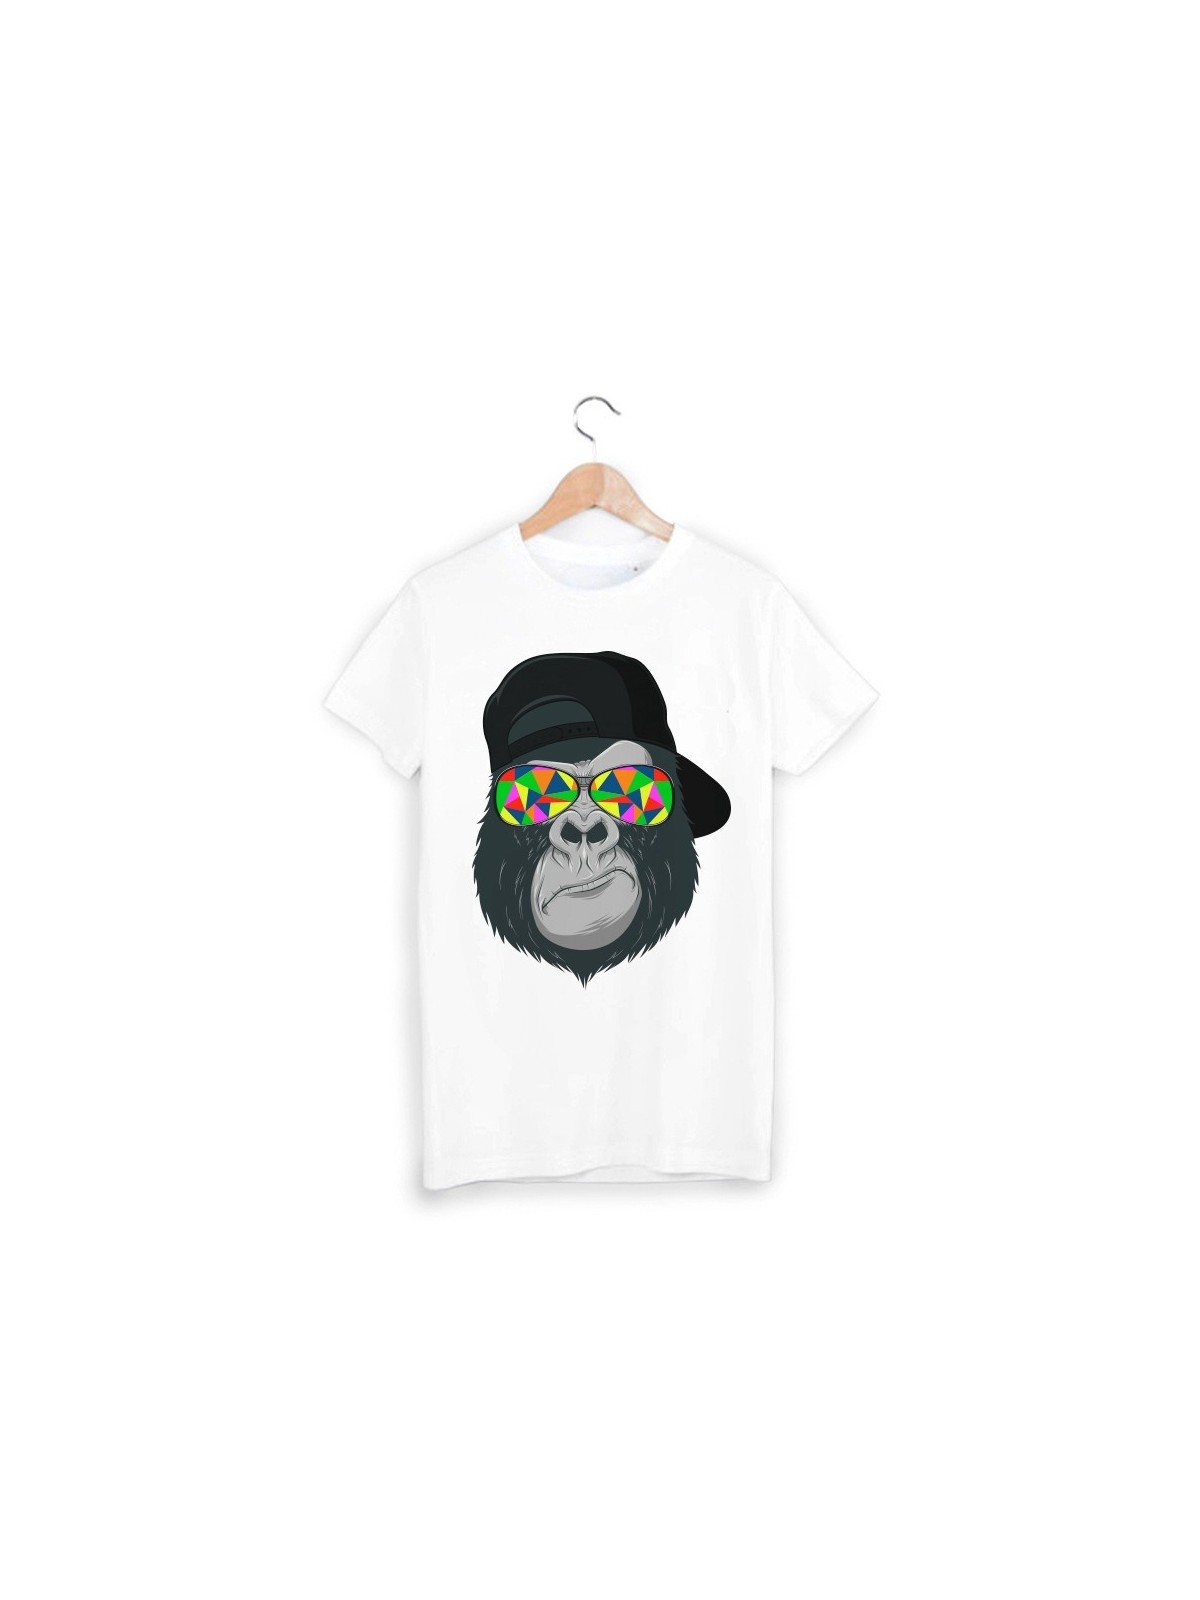 T-Shirt gorille psychÃ©dÃ©lique ref 994